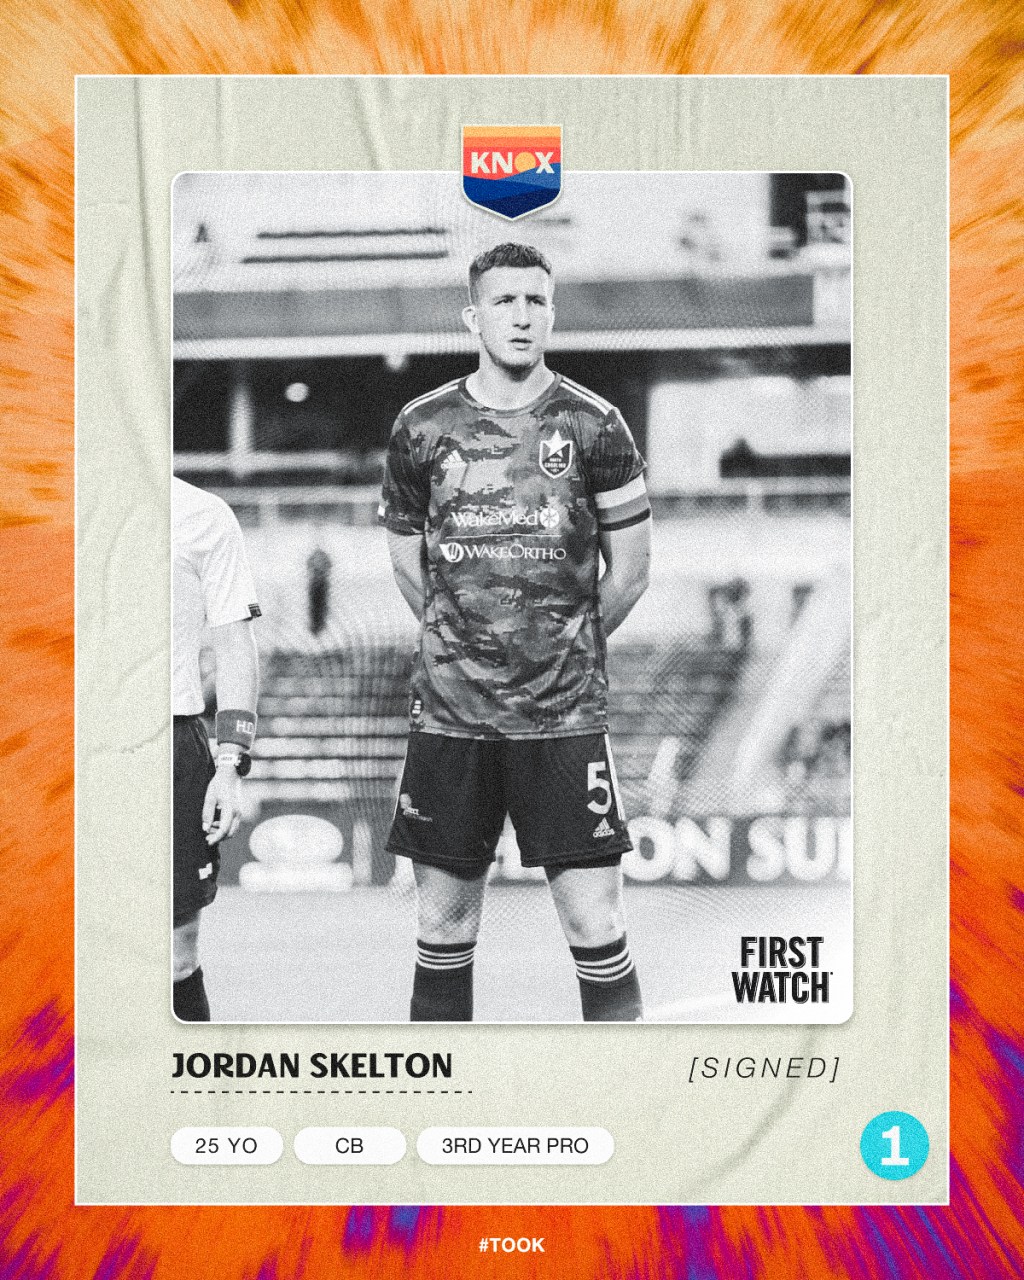 #4: Jordan Skelton